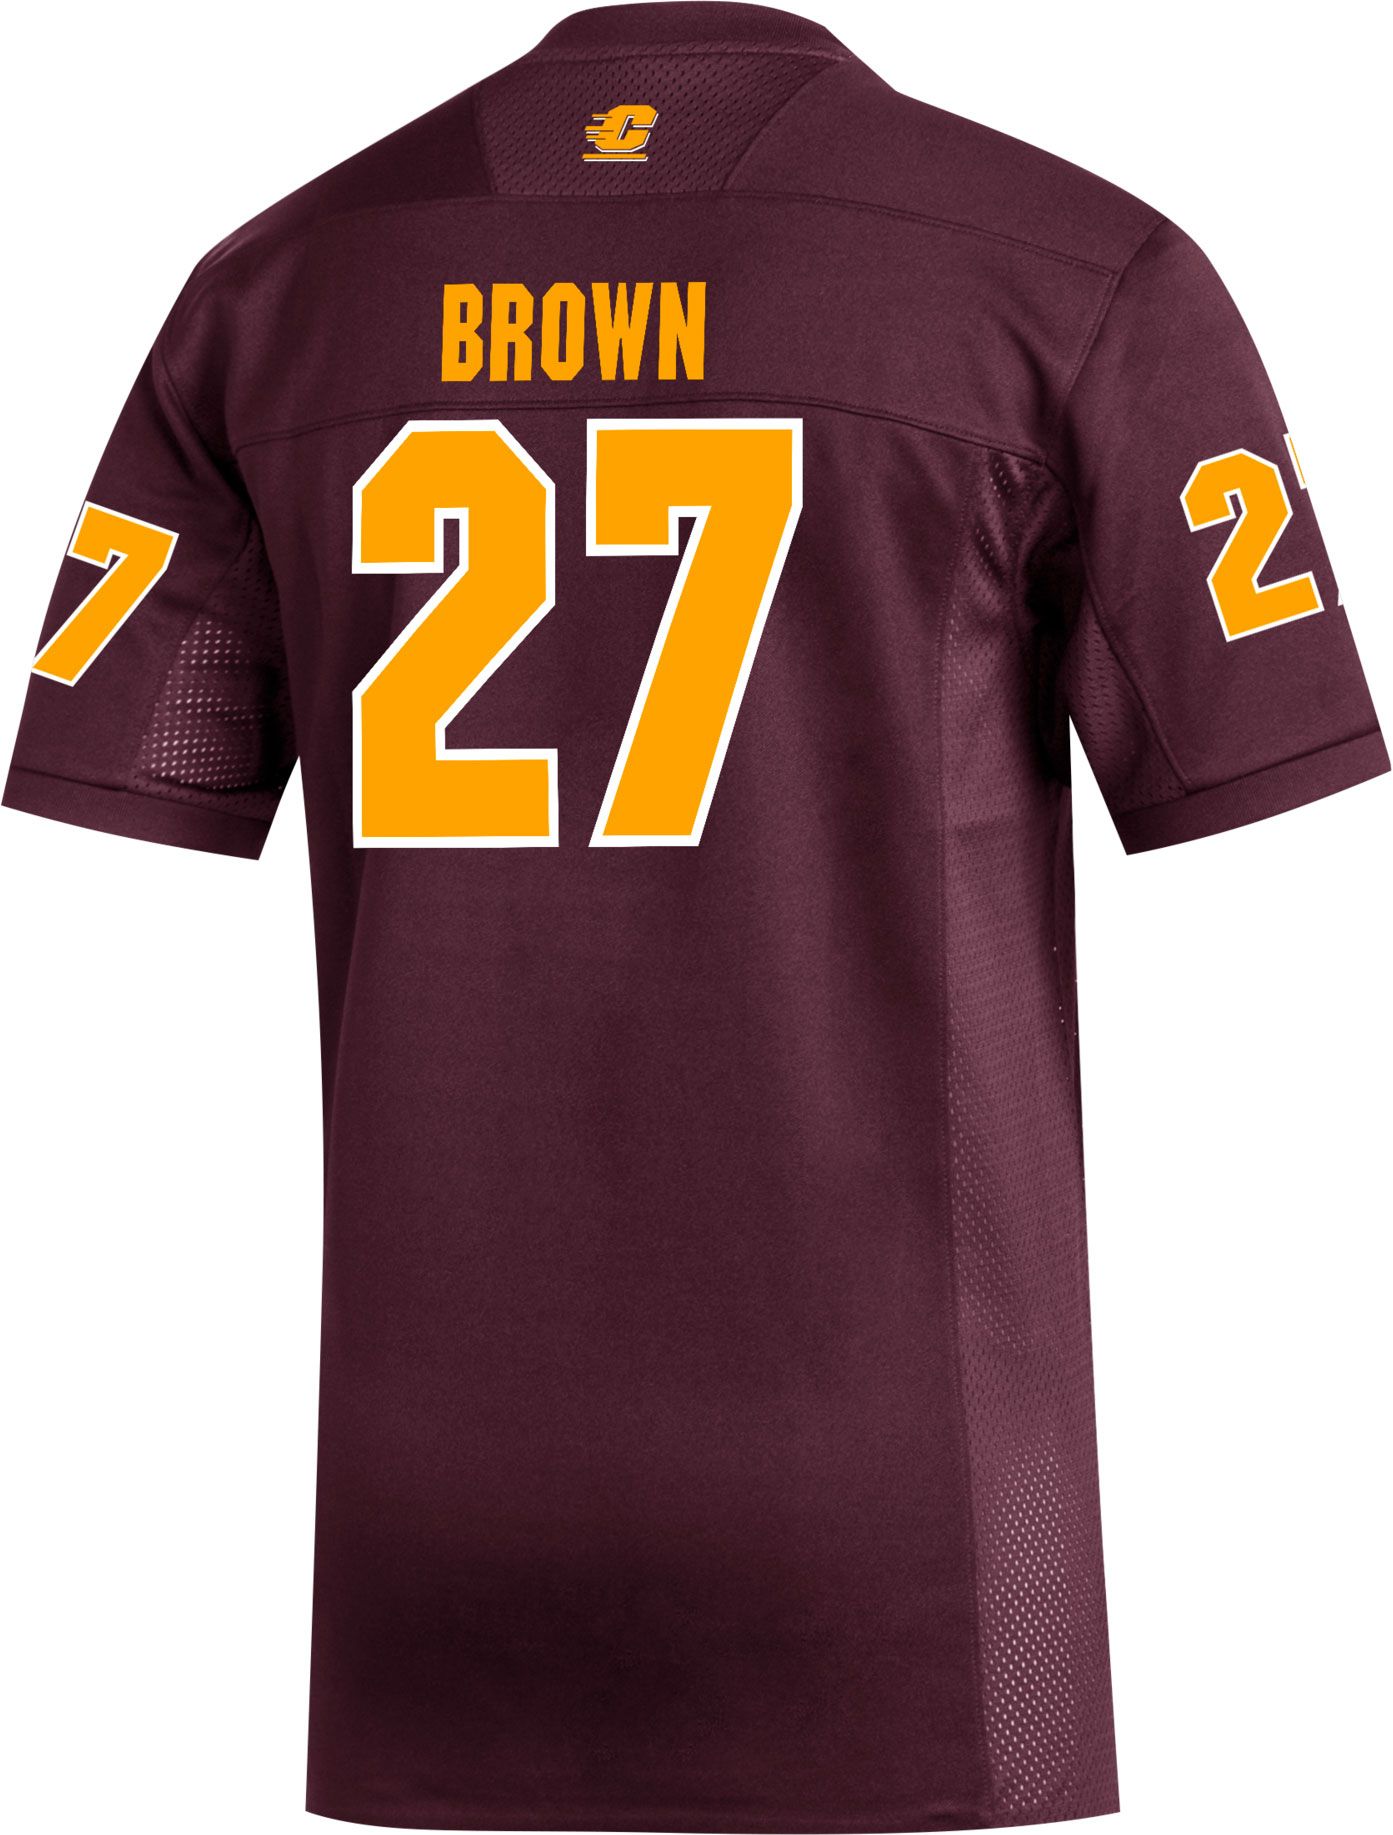 antonio brown replica jersey